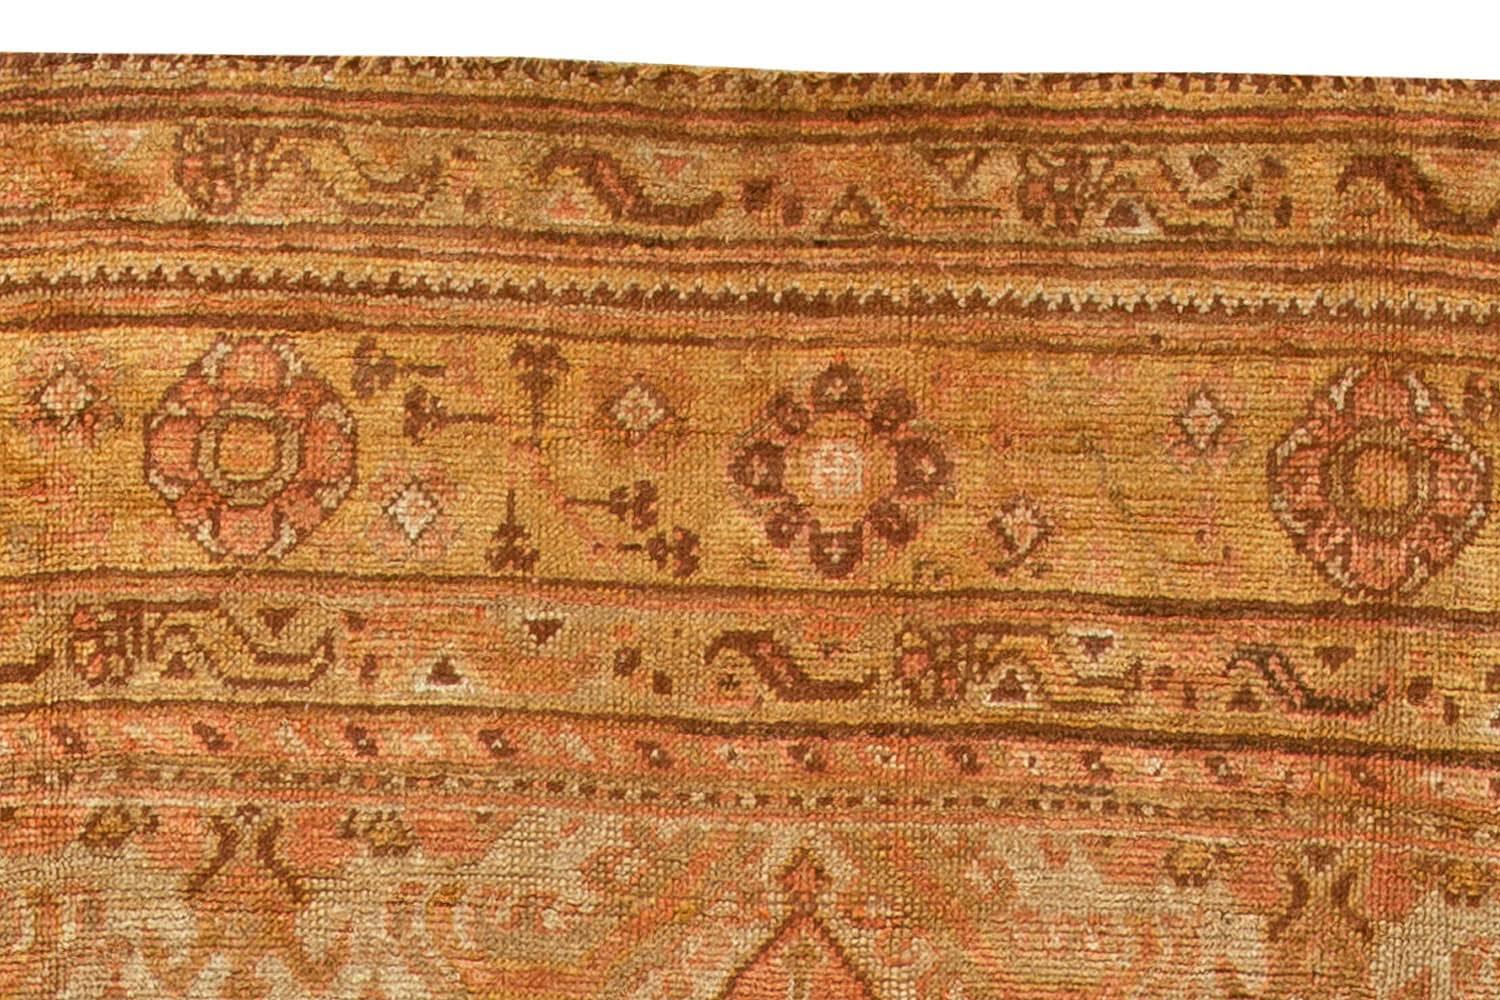 19th Century Antique Turkish Oushak Carpet